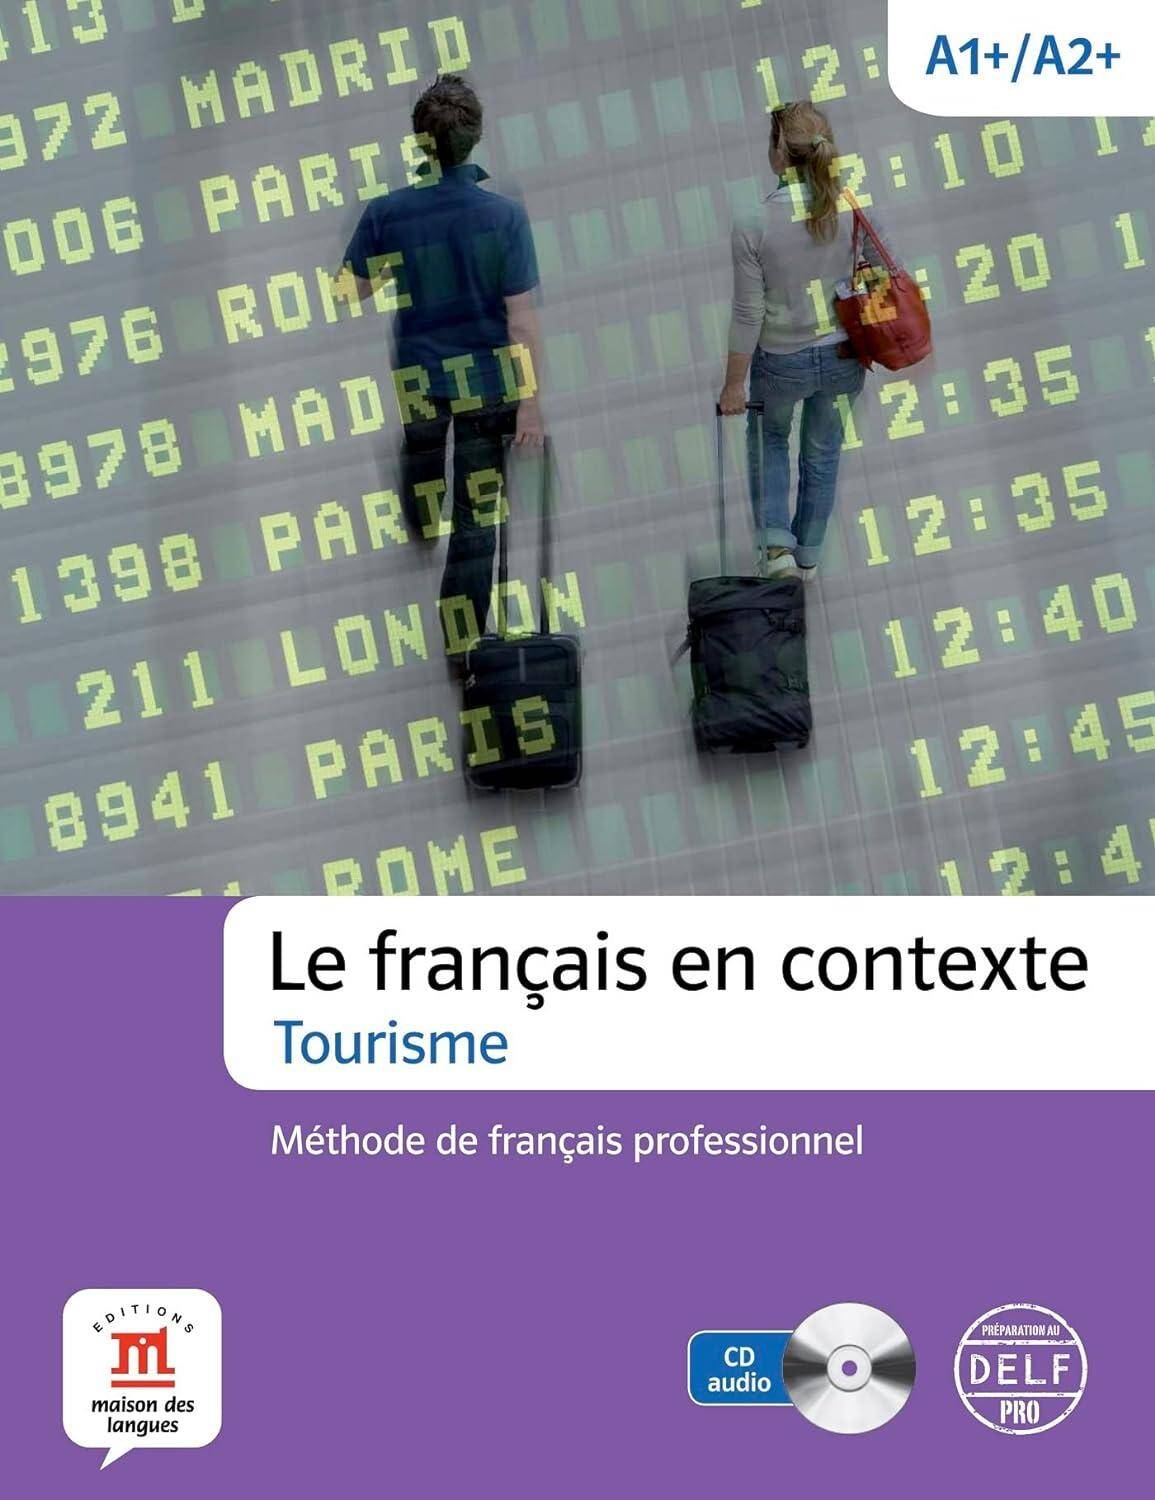 Le francais en contexte - tourisme